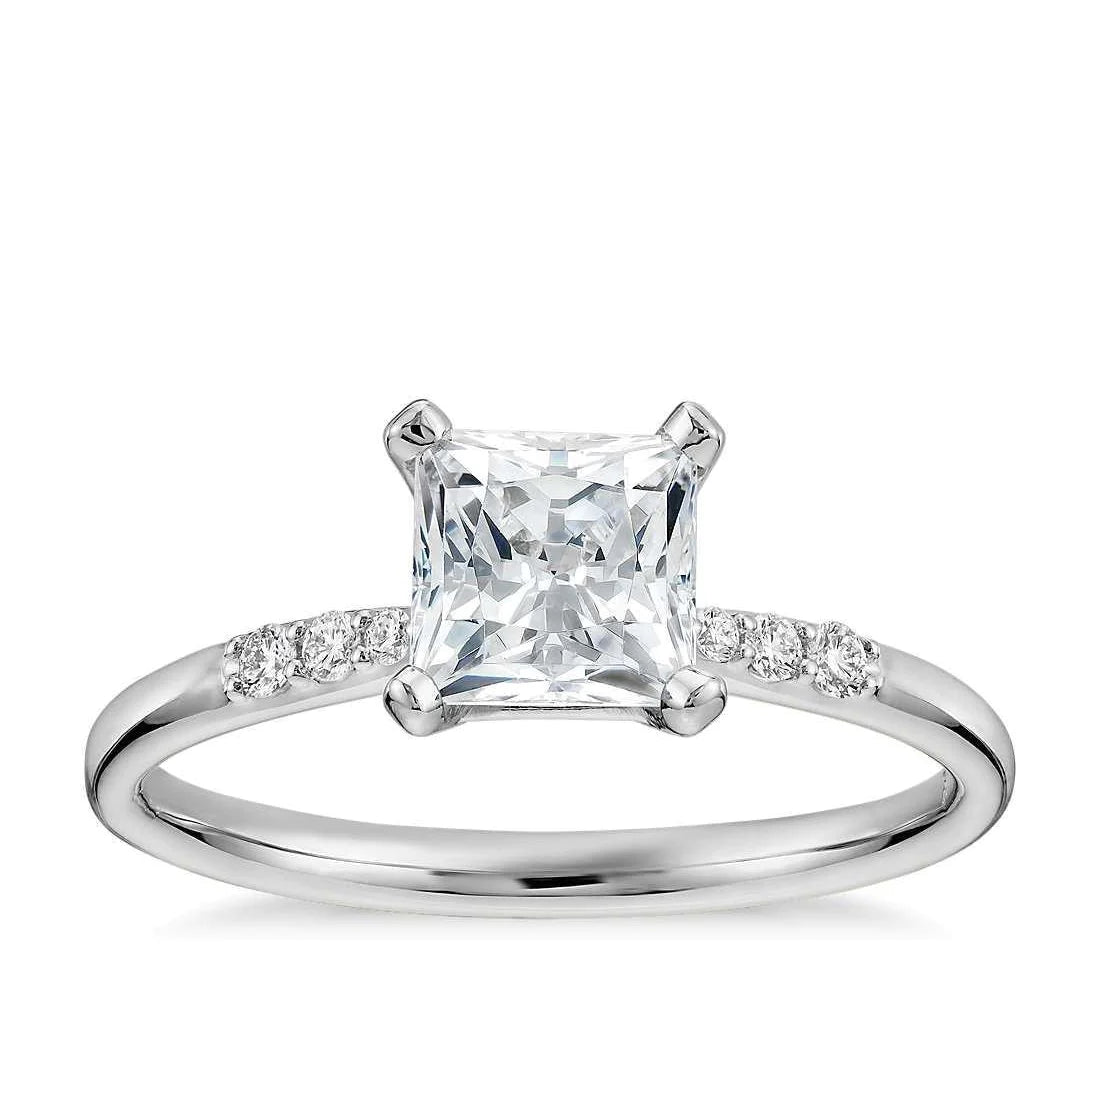 Sparkling Princess & Round 3 Carats Real Diamond Ring White Gold 14K